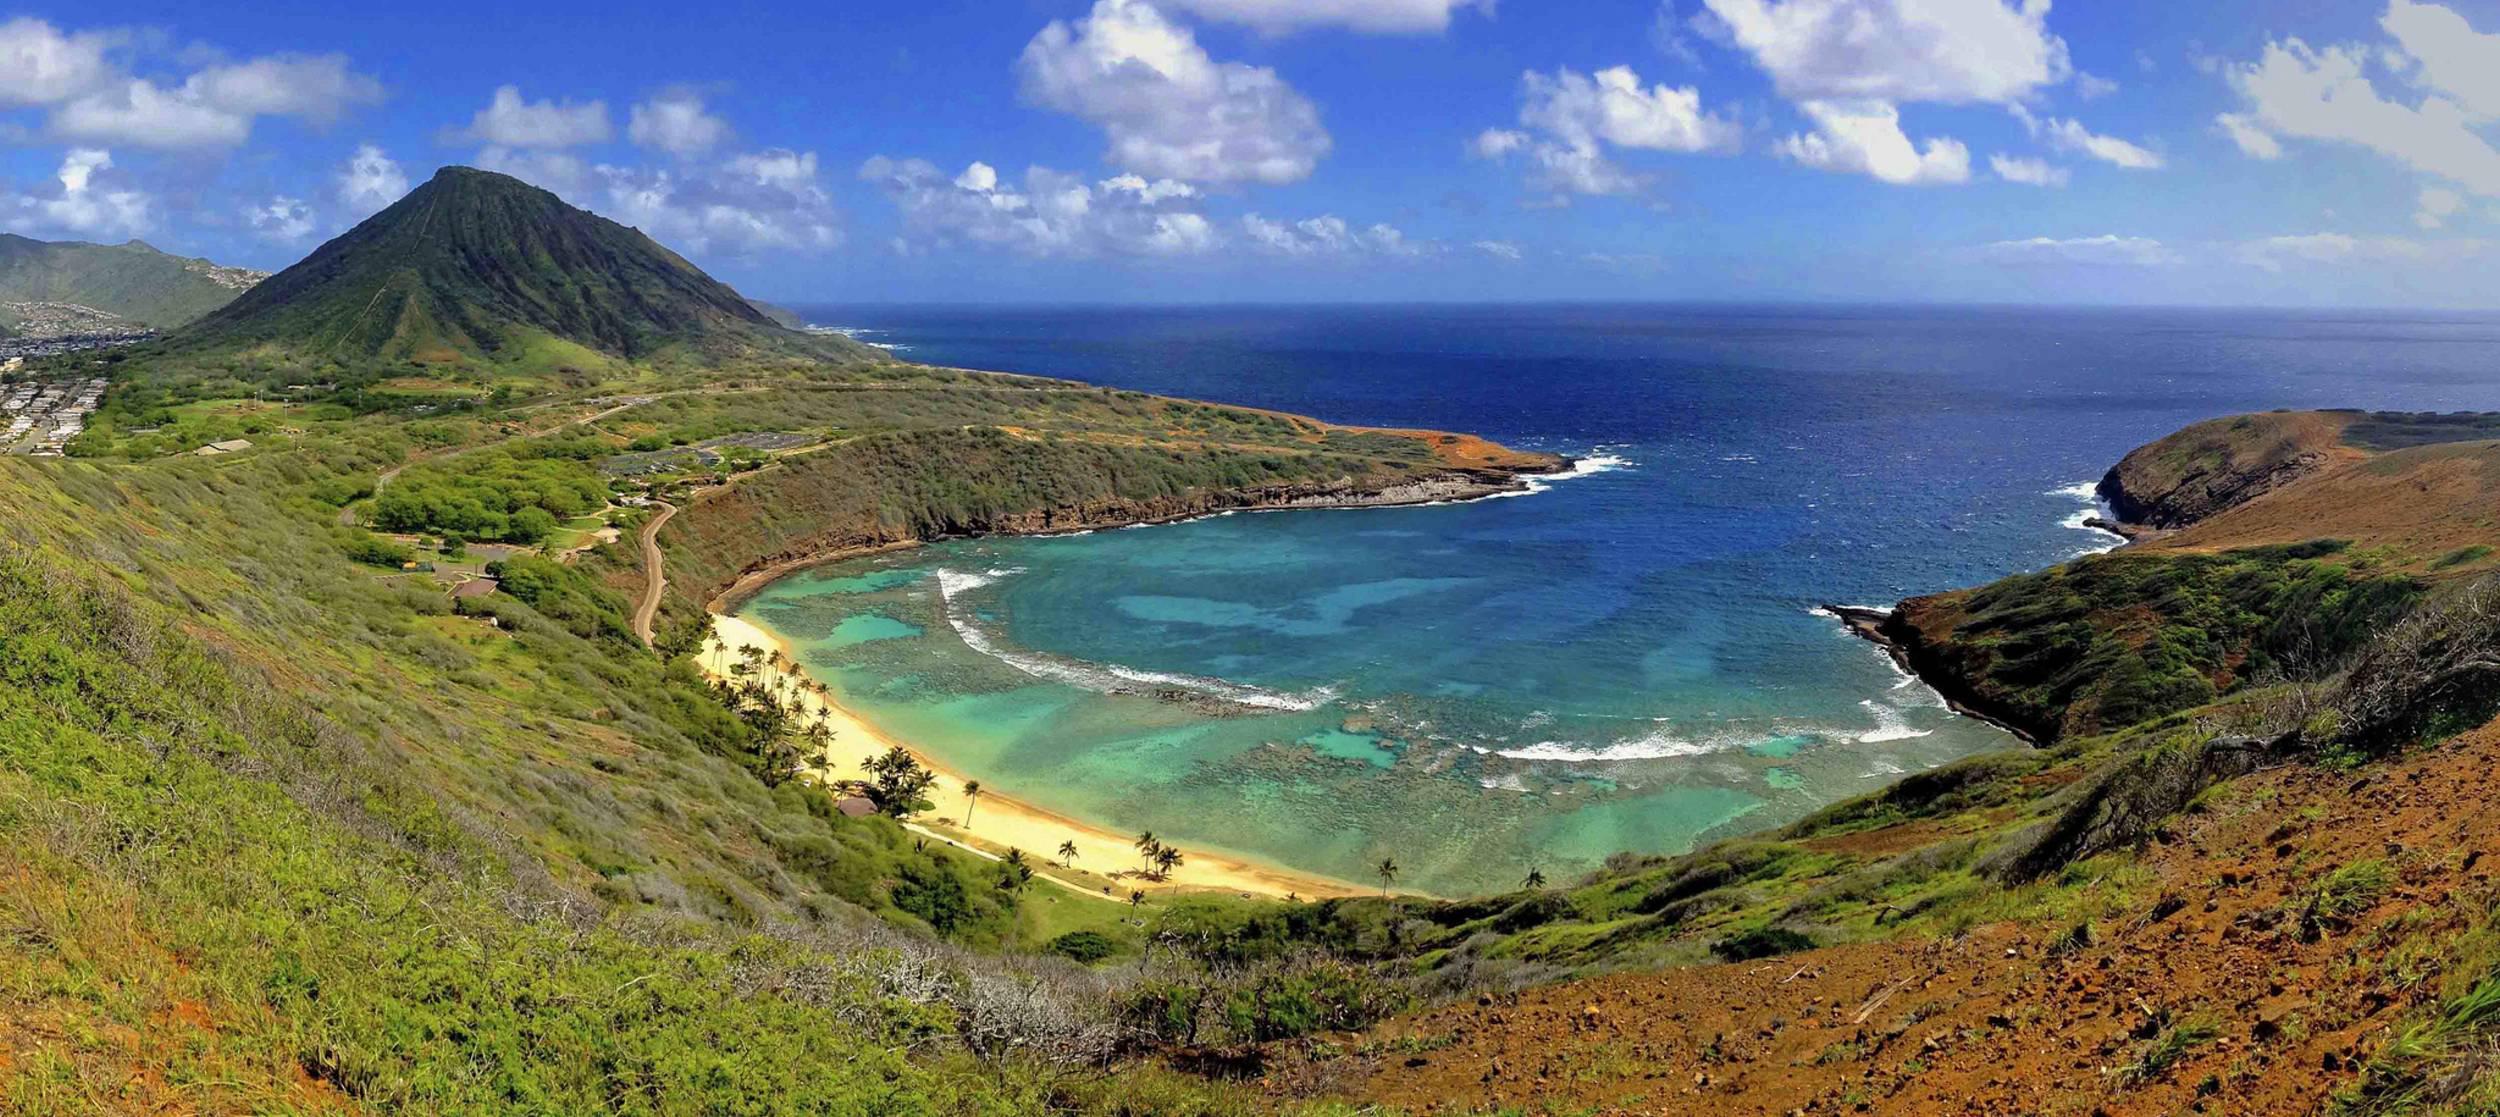 Top HD Oahu Hawaii Wallpaper. Travelling HD.39 KB